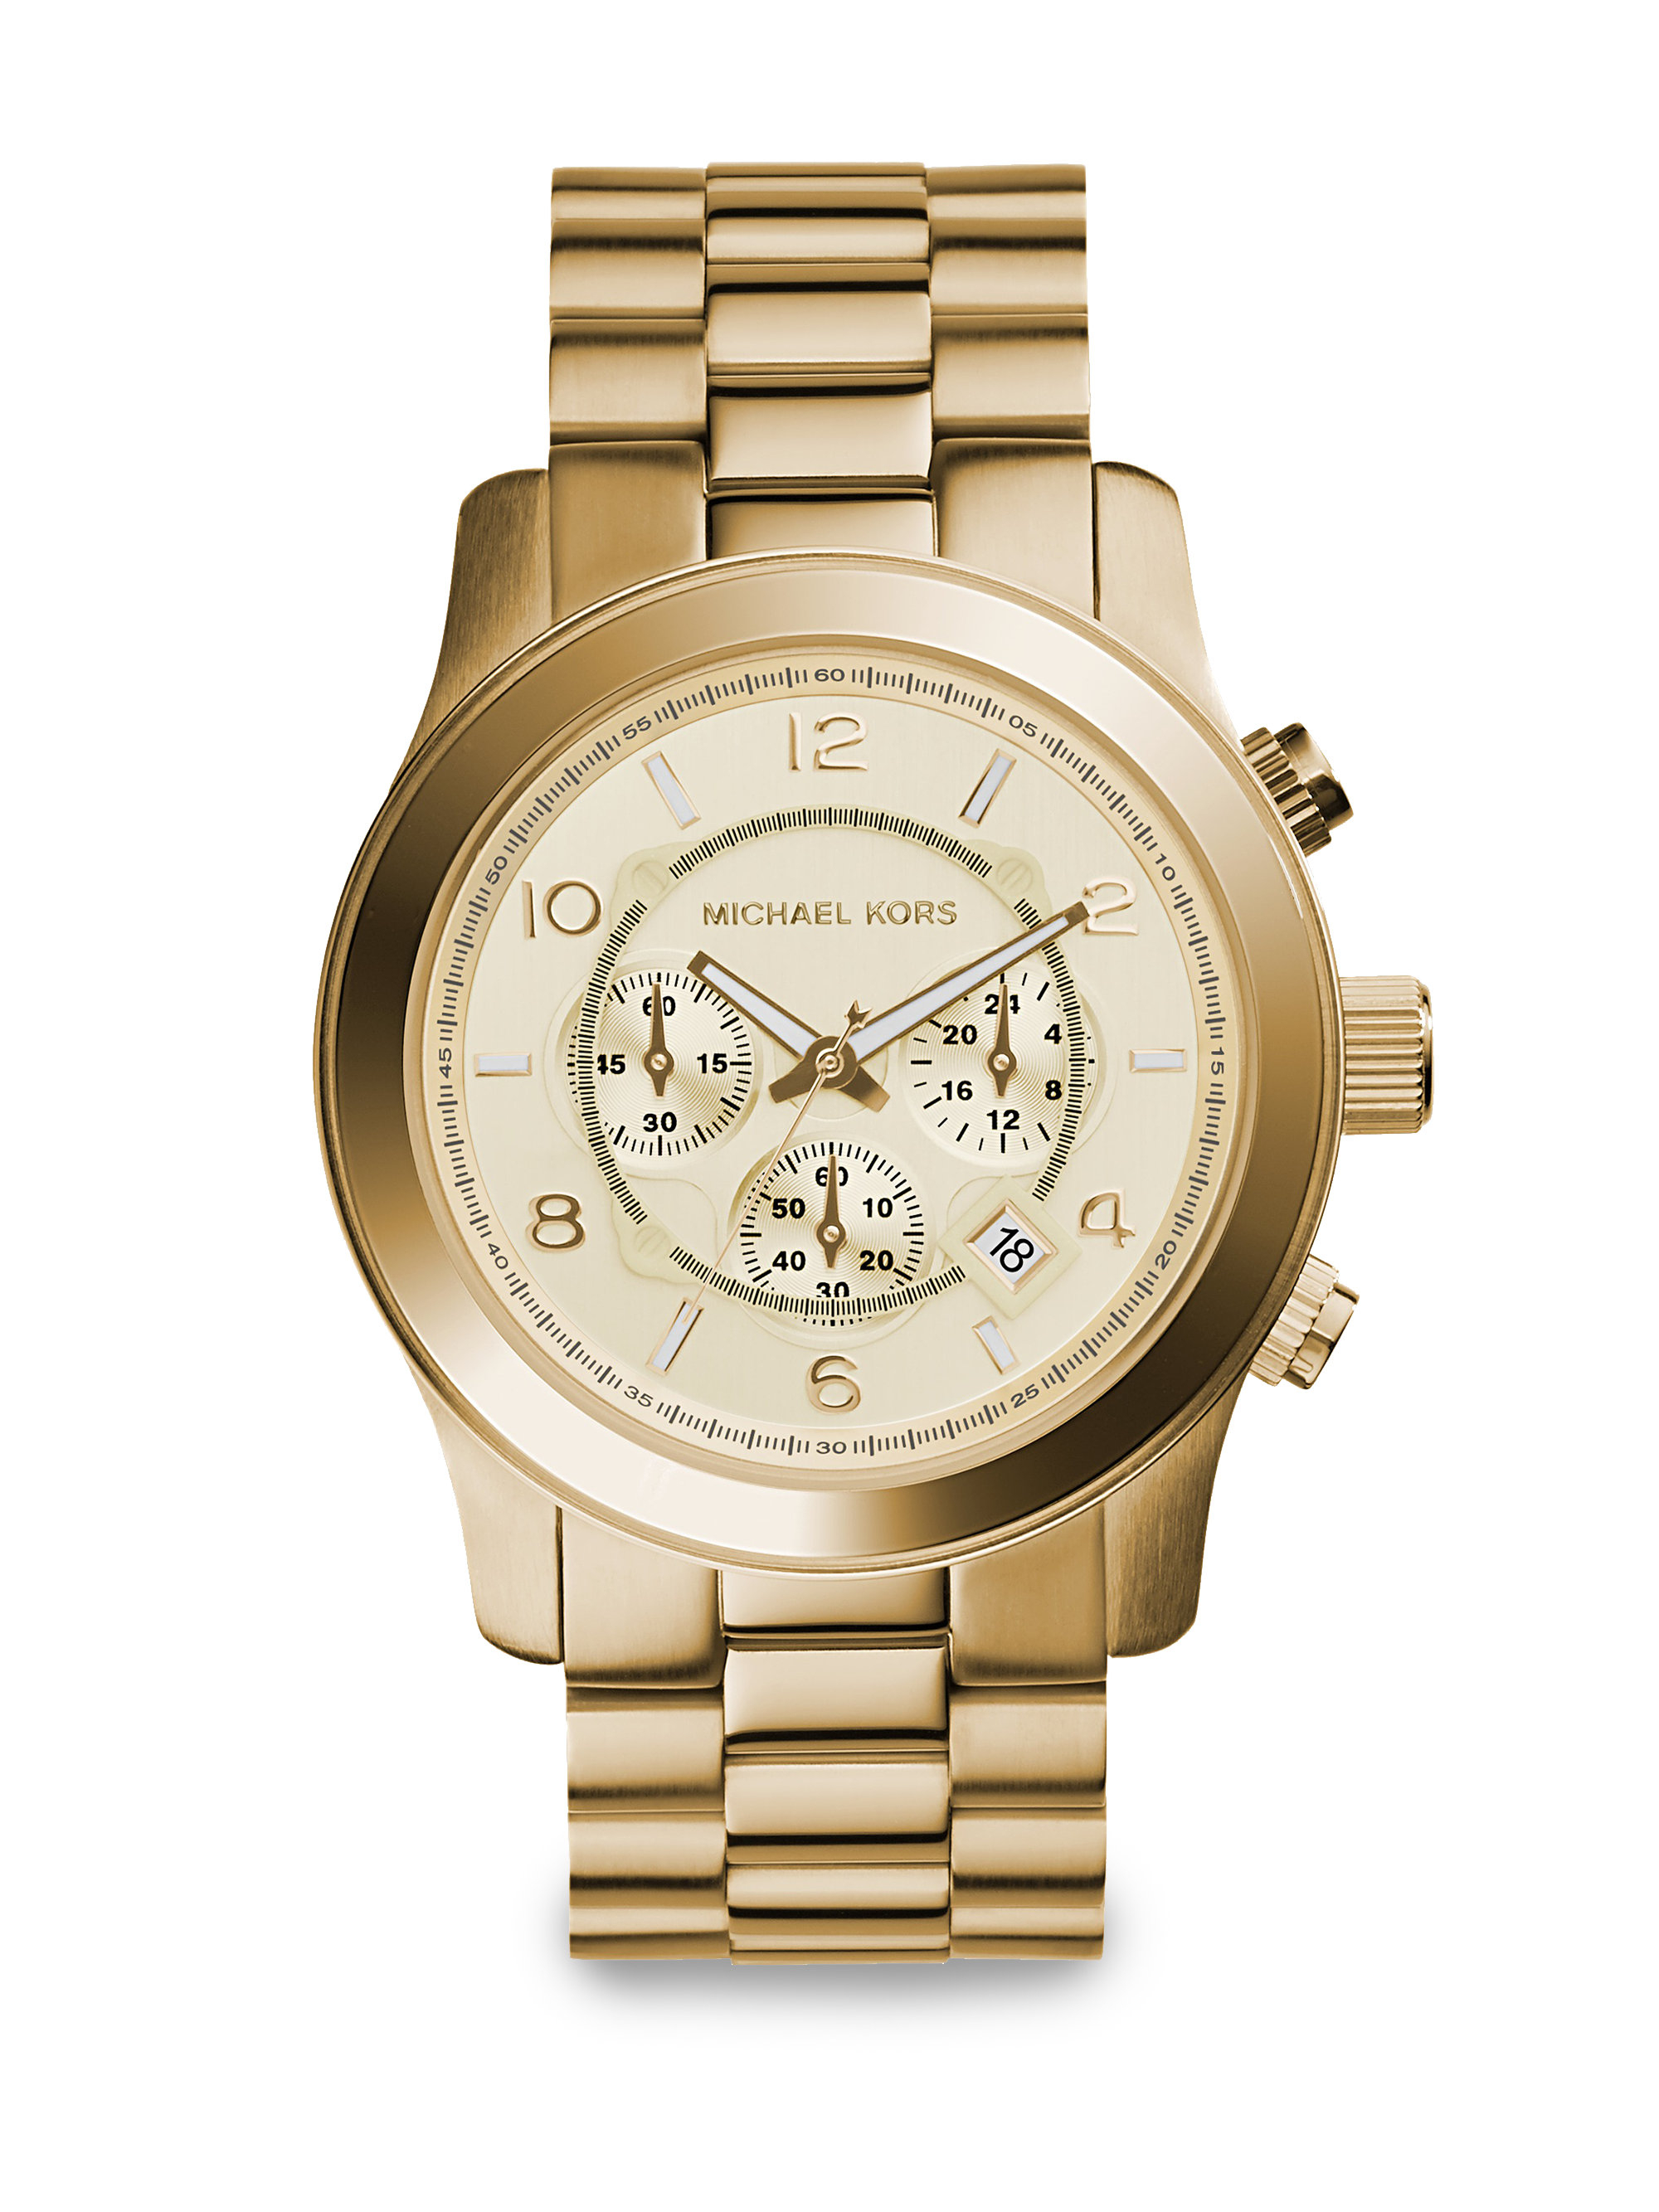 Lyst - Michael kors Runway Oversized Gold-Toned Watch MK8077 in Metallic